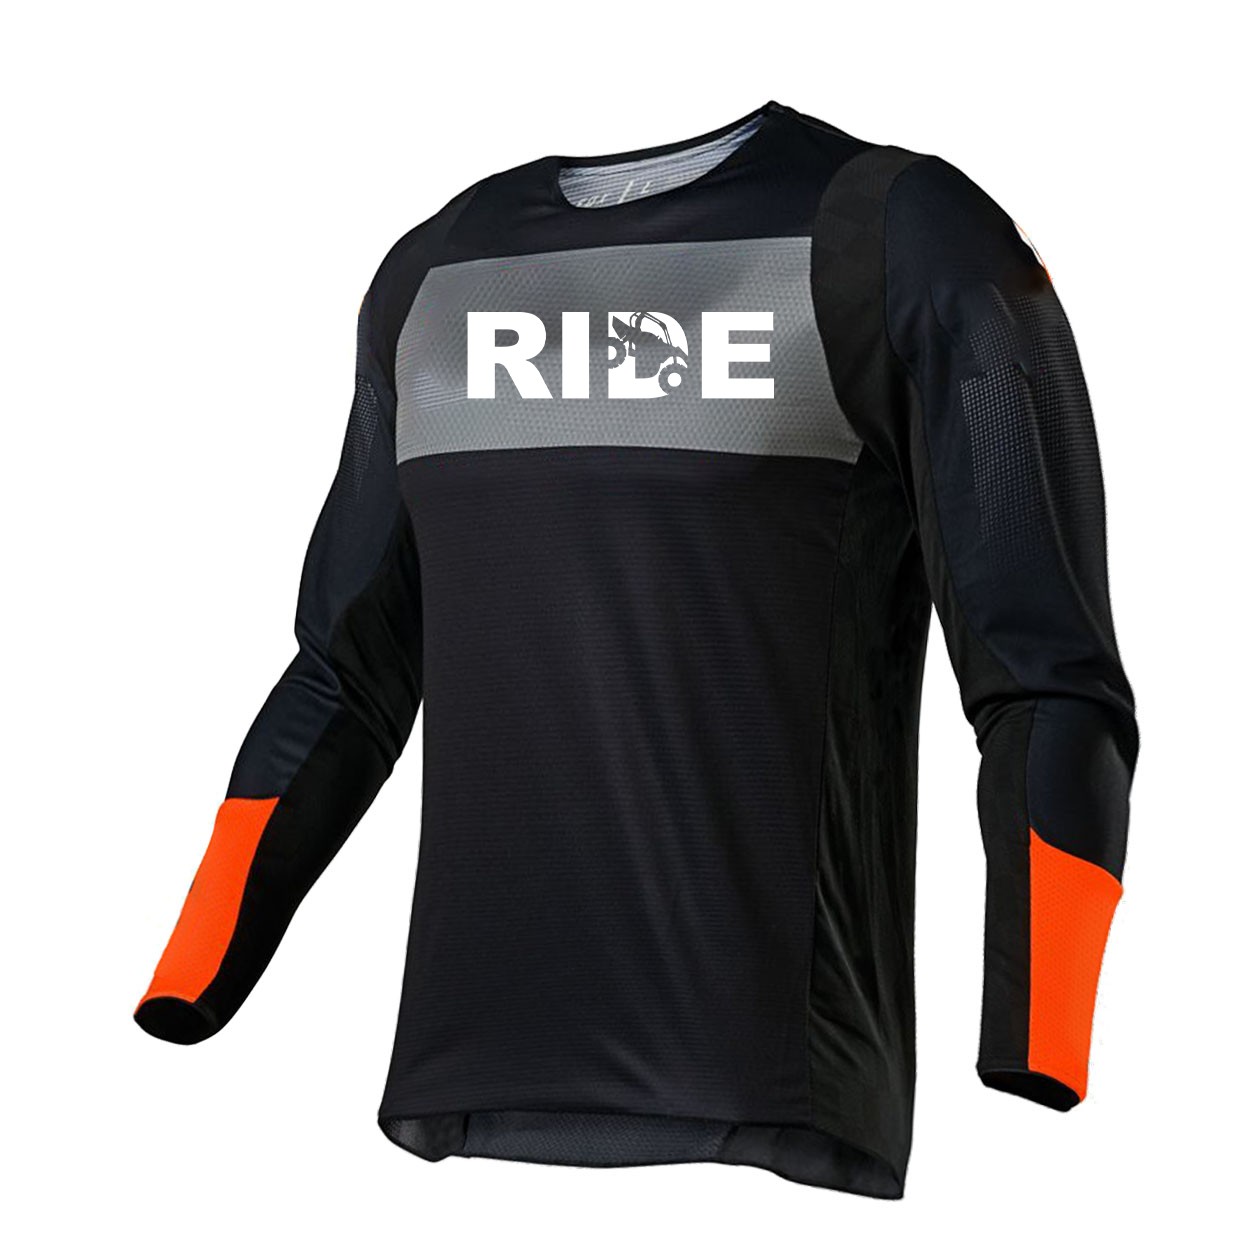 Ride UTV Logo Classic Performance Jersey Long Sleeve Shirt Black/Gray/Orange